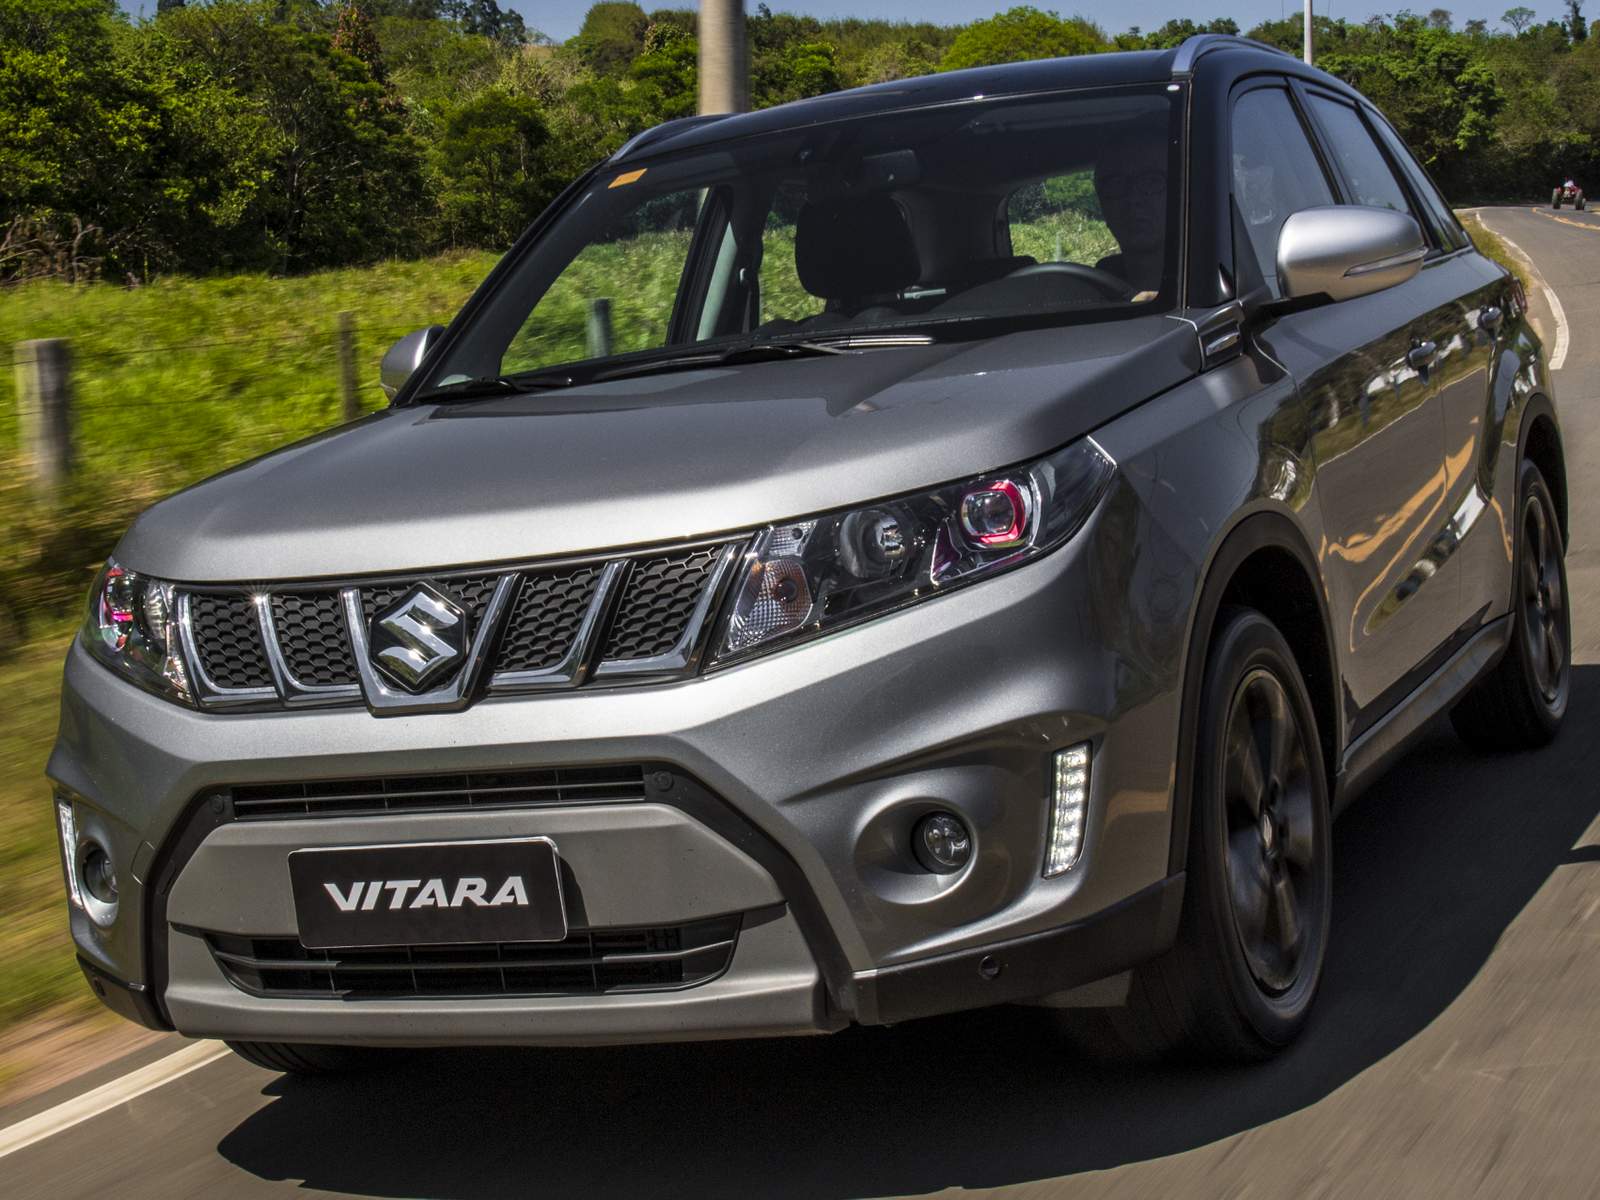 New Suzuki Vitara 2017 preços, consumo, detalhes vídeo